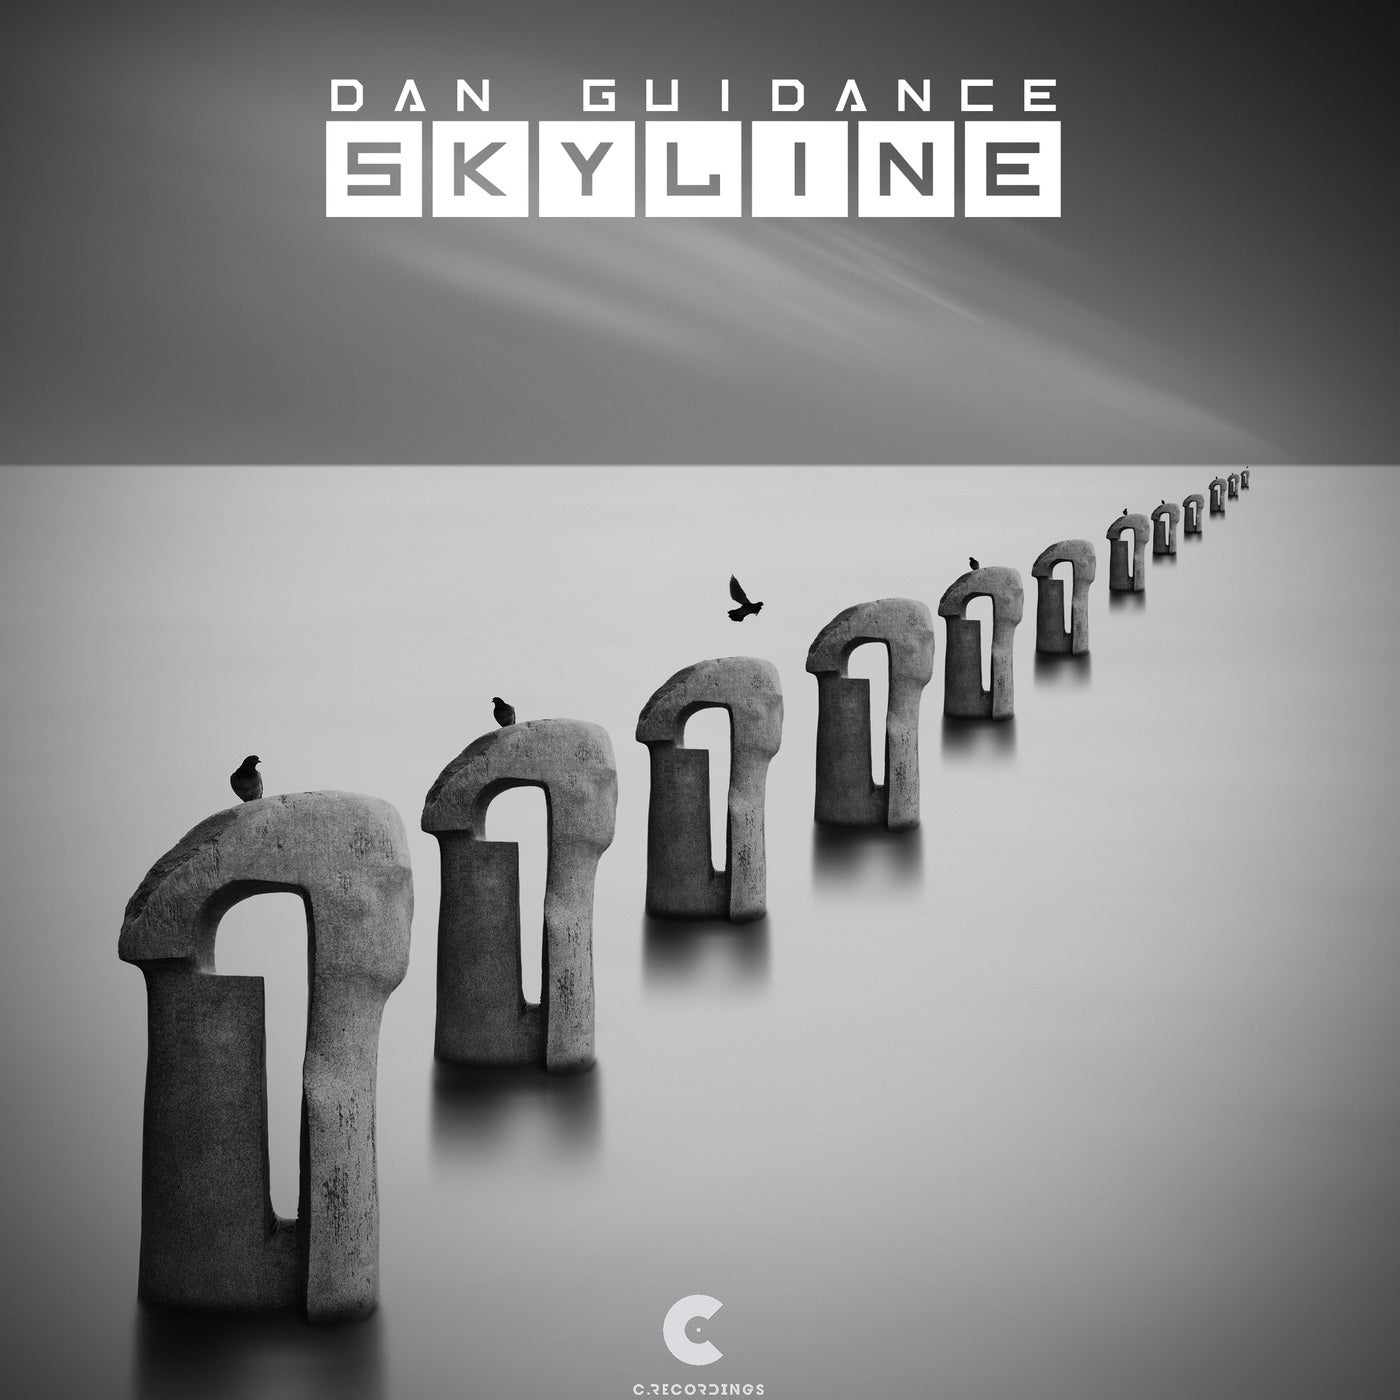 Dan Guidance - Skyline [C Recordings]